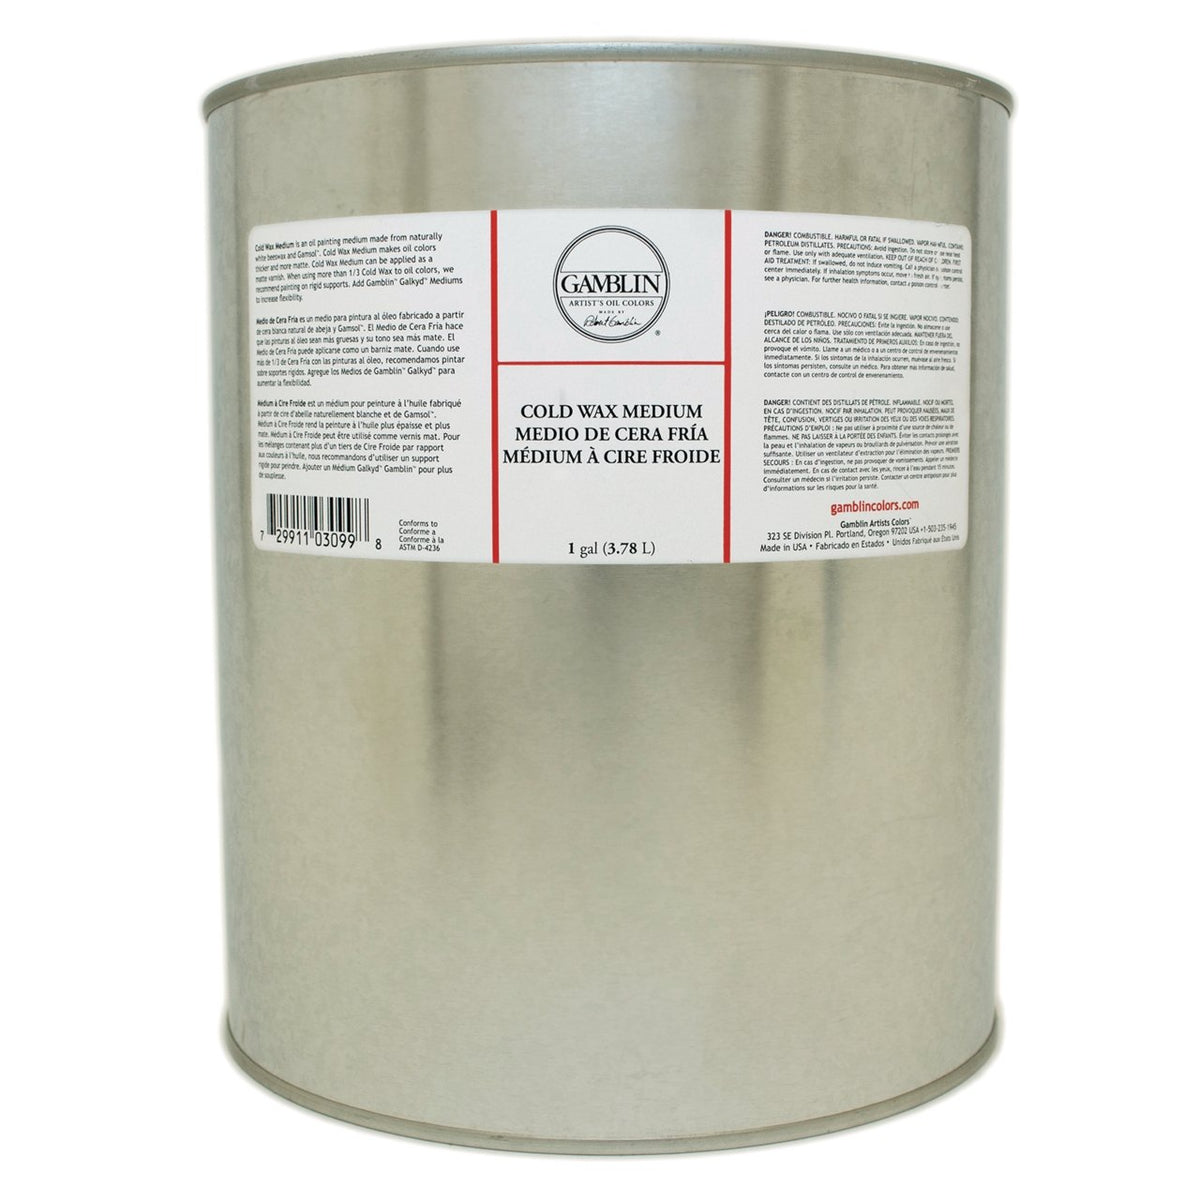 Dorlands : Wax Medium : 3780ml (1 Gallon) - Cold Wax - Encaustic & Wax -  Color